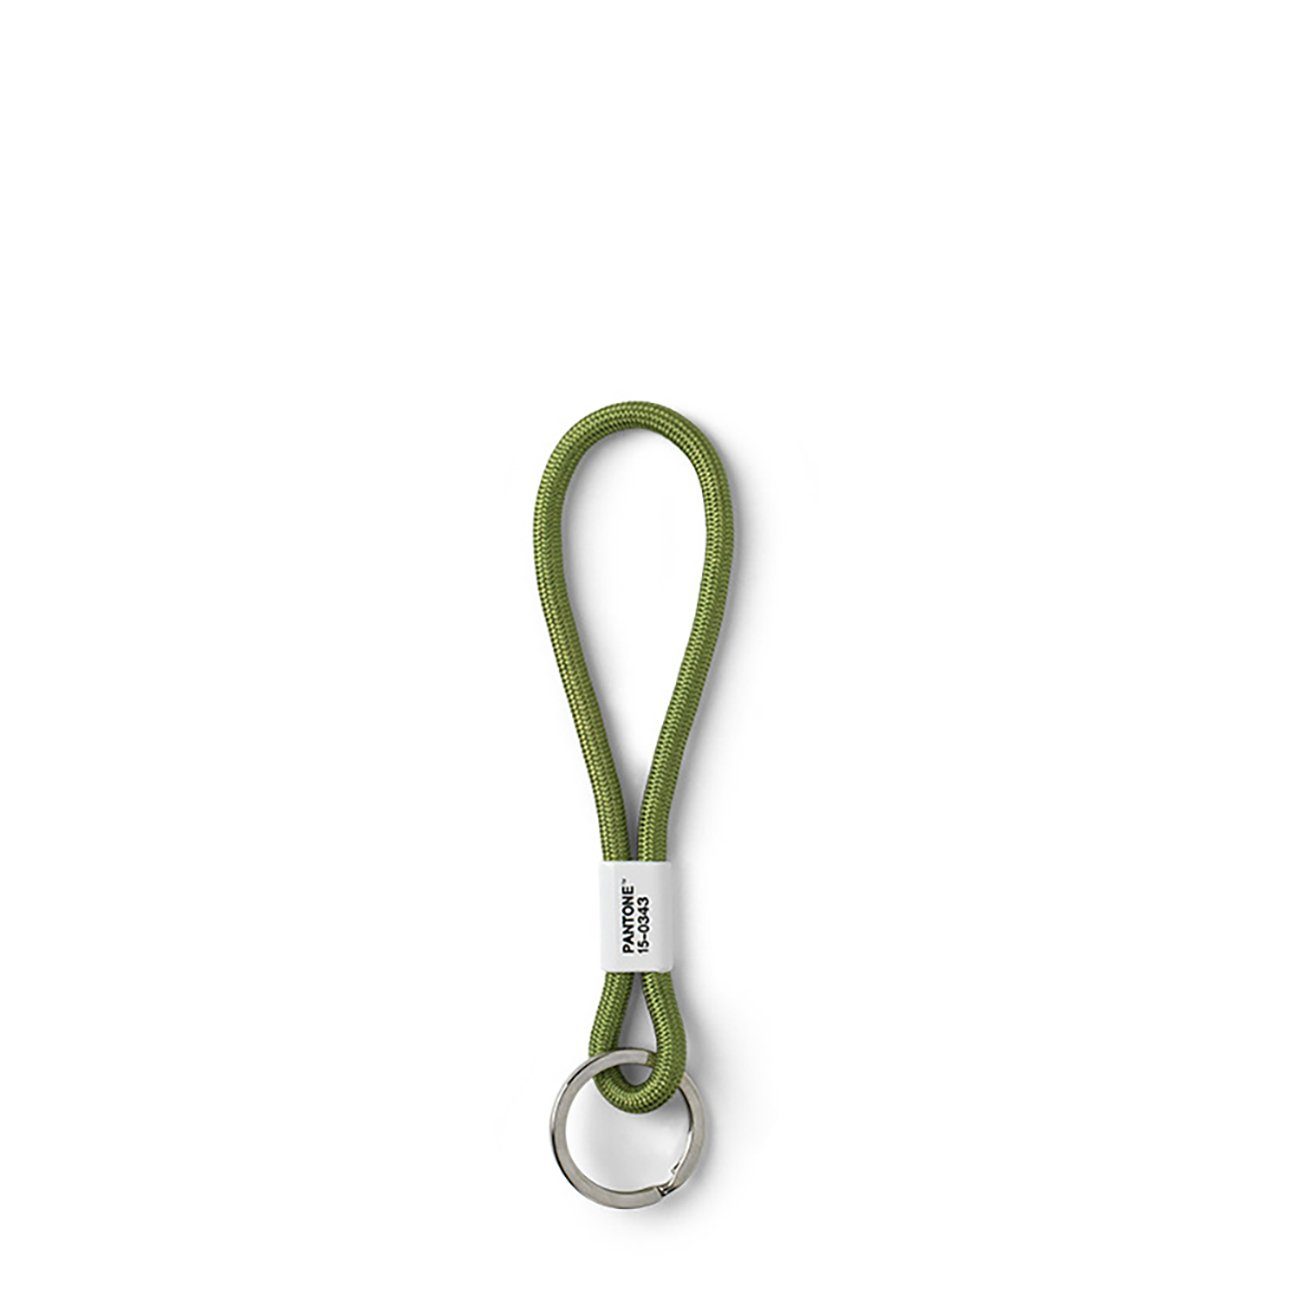 PANTONE Schlüsselanhänger, Design- Schlüsselband, Key Chain, kurz Green 15-0343